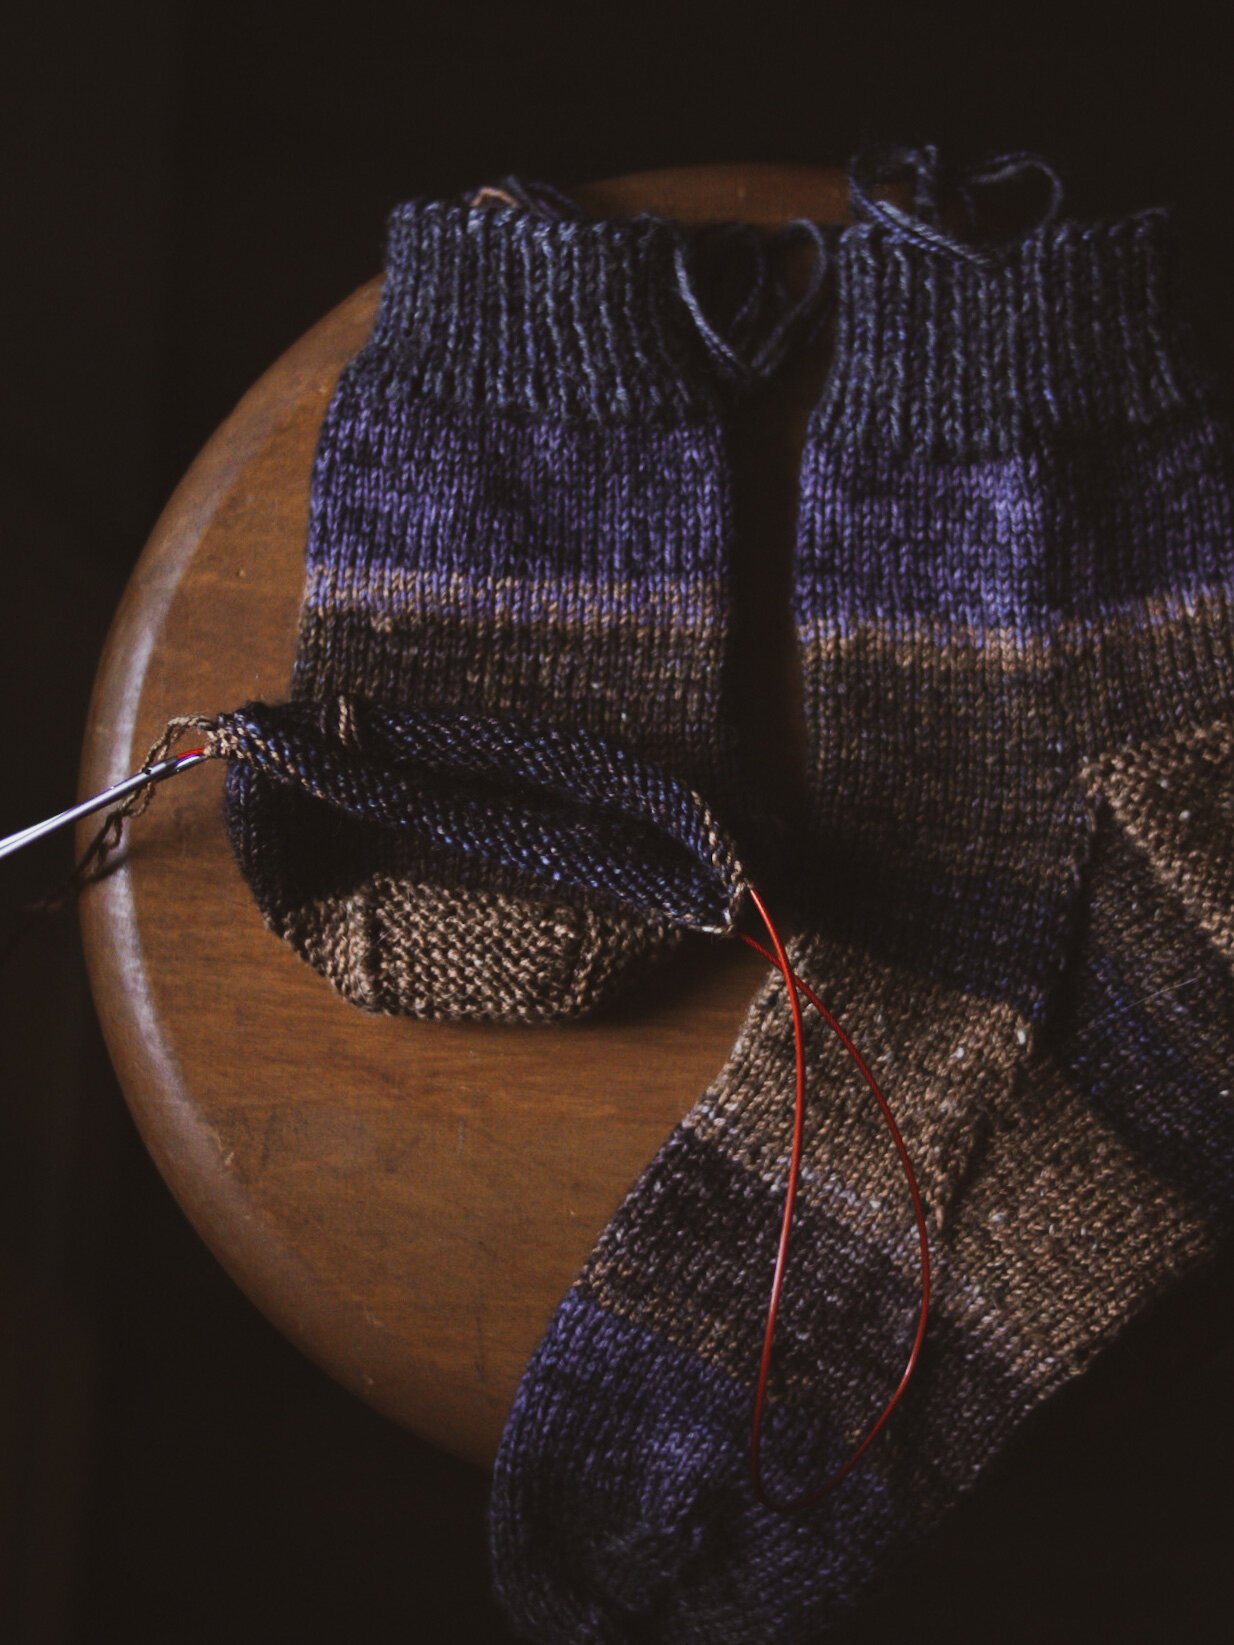 Top Methods of knitting Socks and my new favorite - New Garden Farm